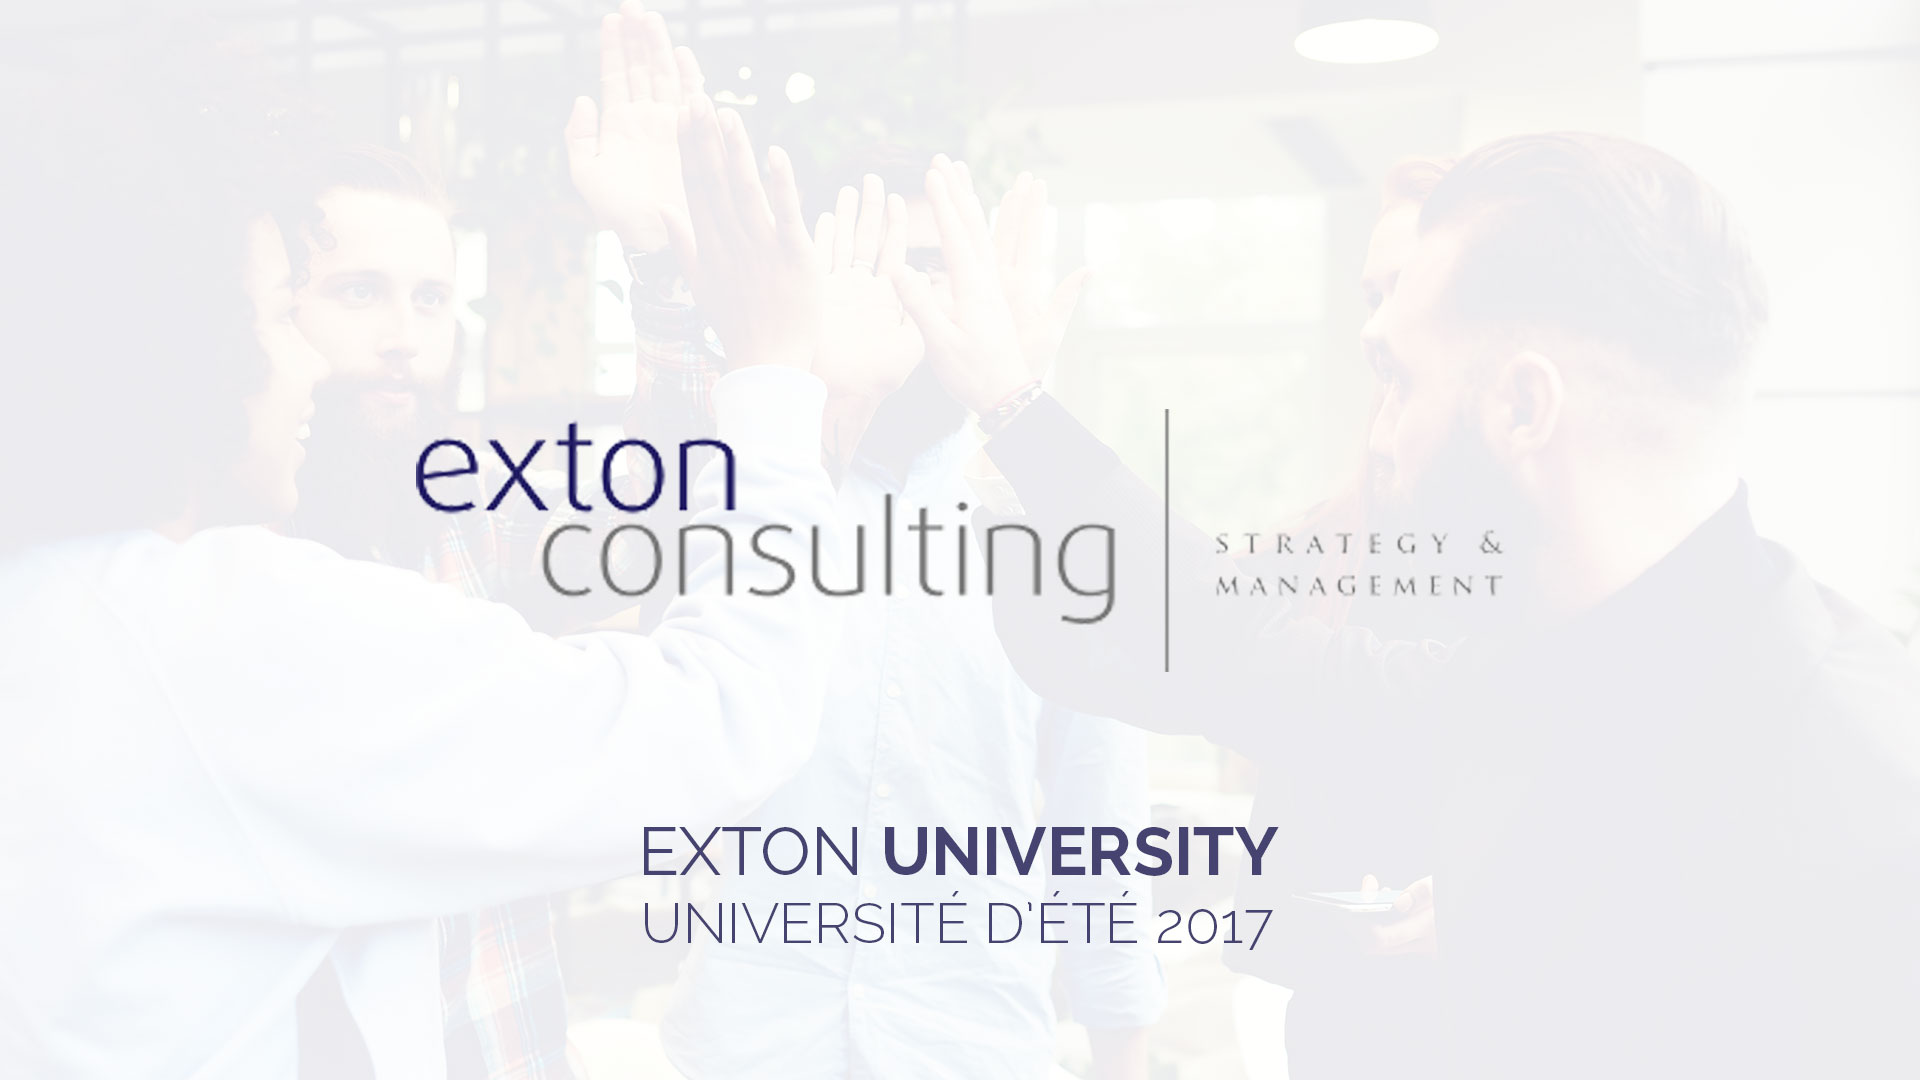 Exton University